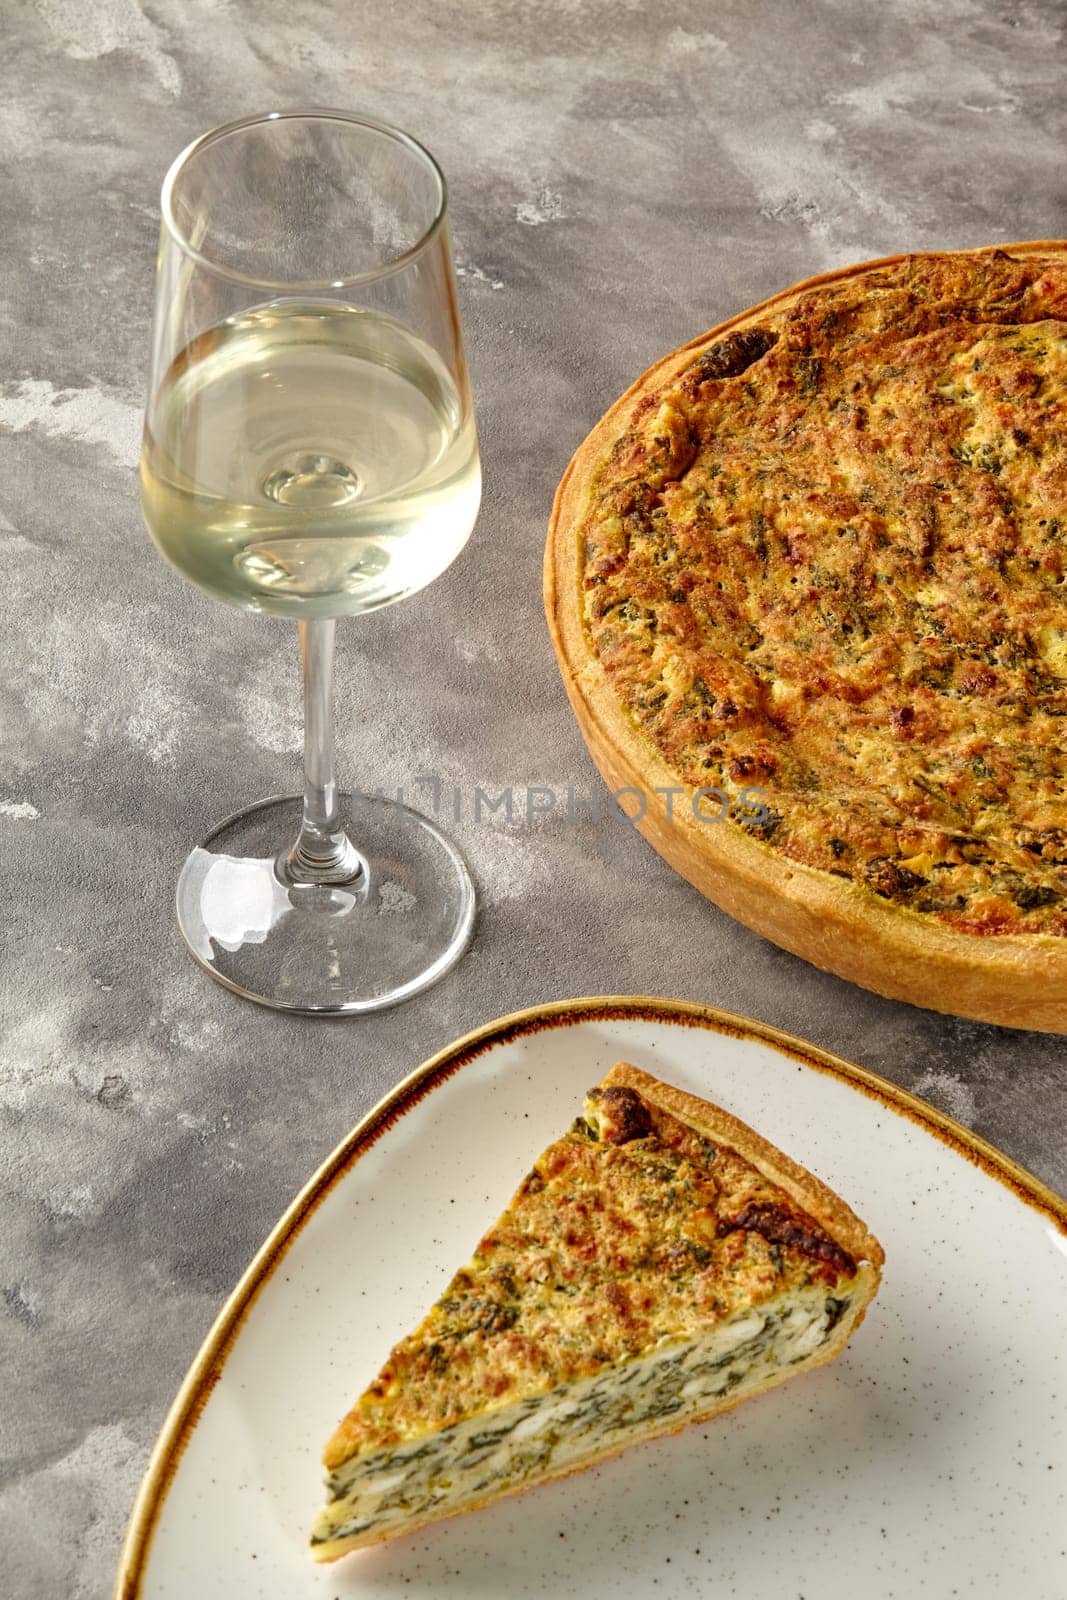 Savory cheese and spinach Quiche Lorraine with white wine by nazarovsergey